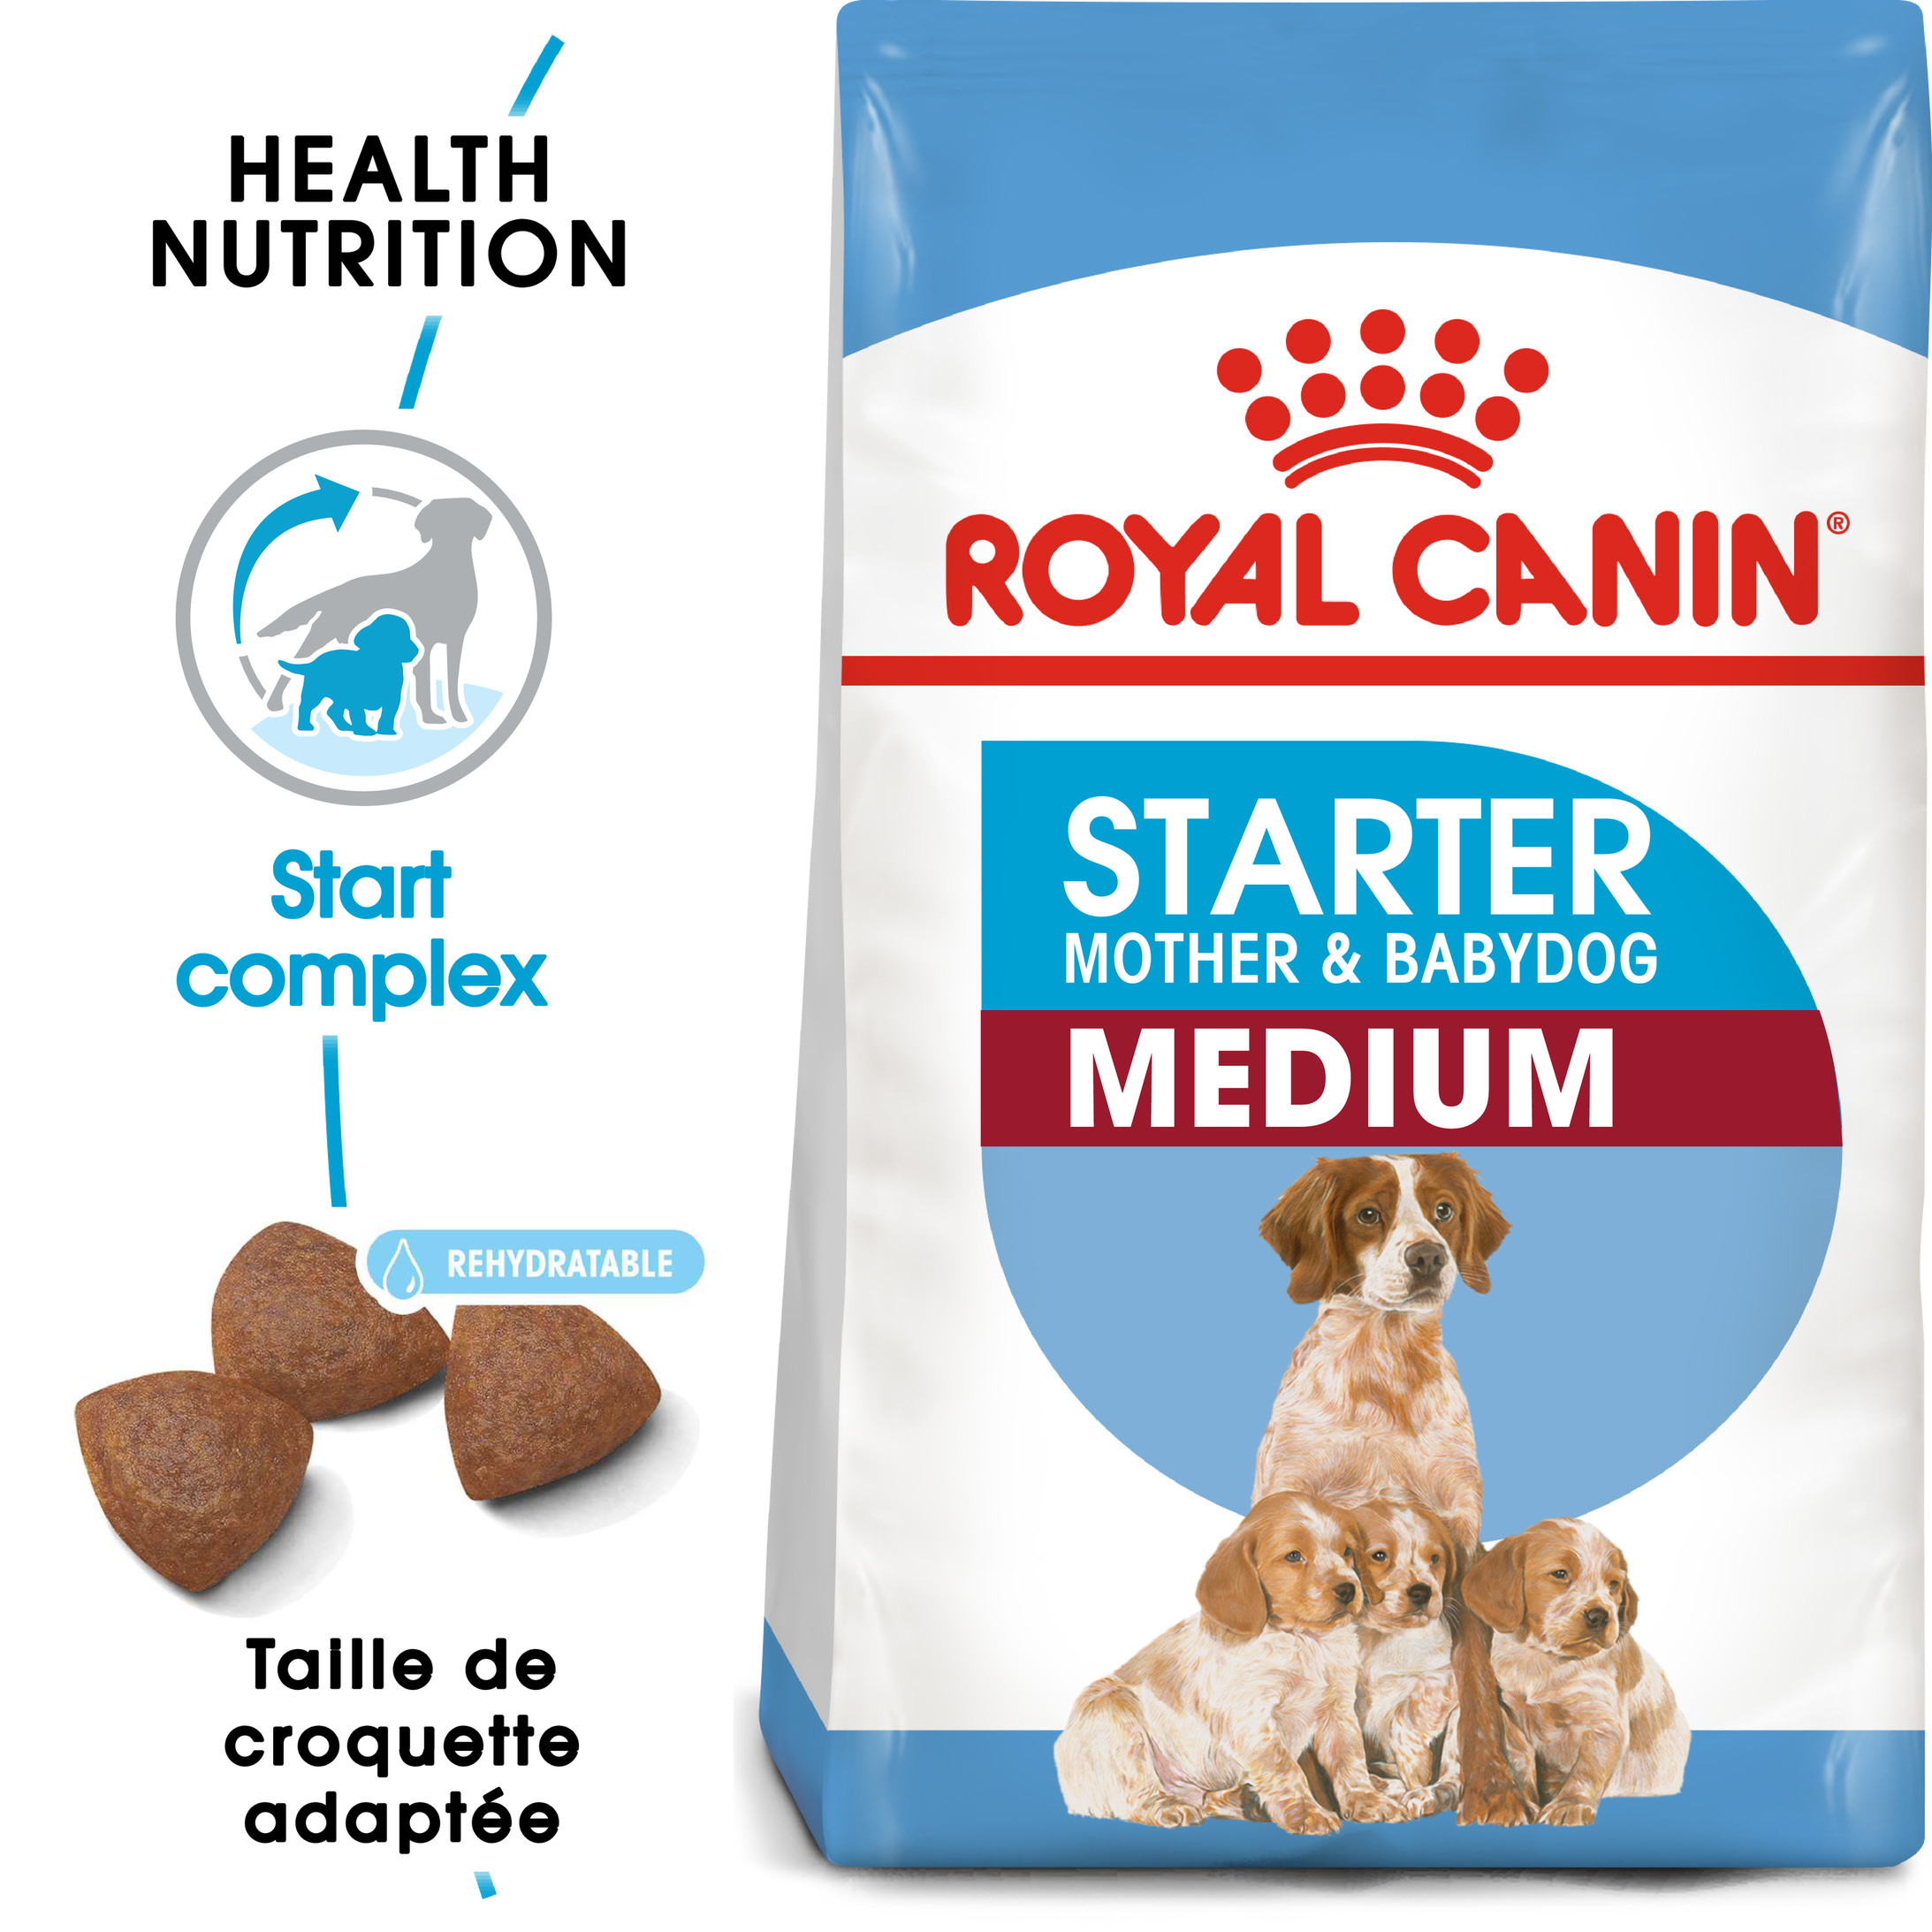 Royal Canin Medium Starter Mother and Babydog